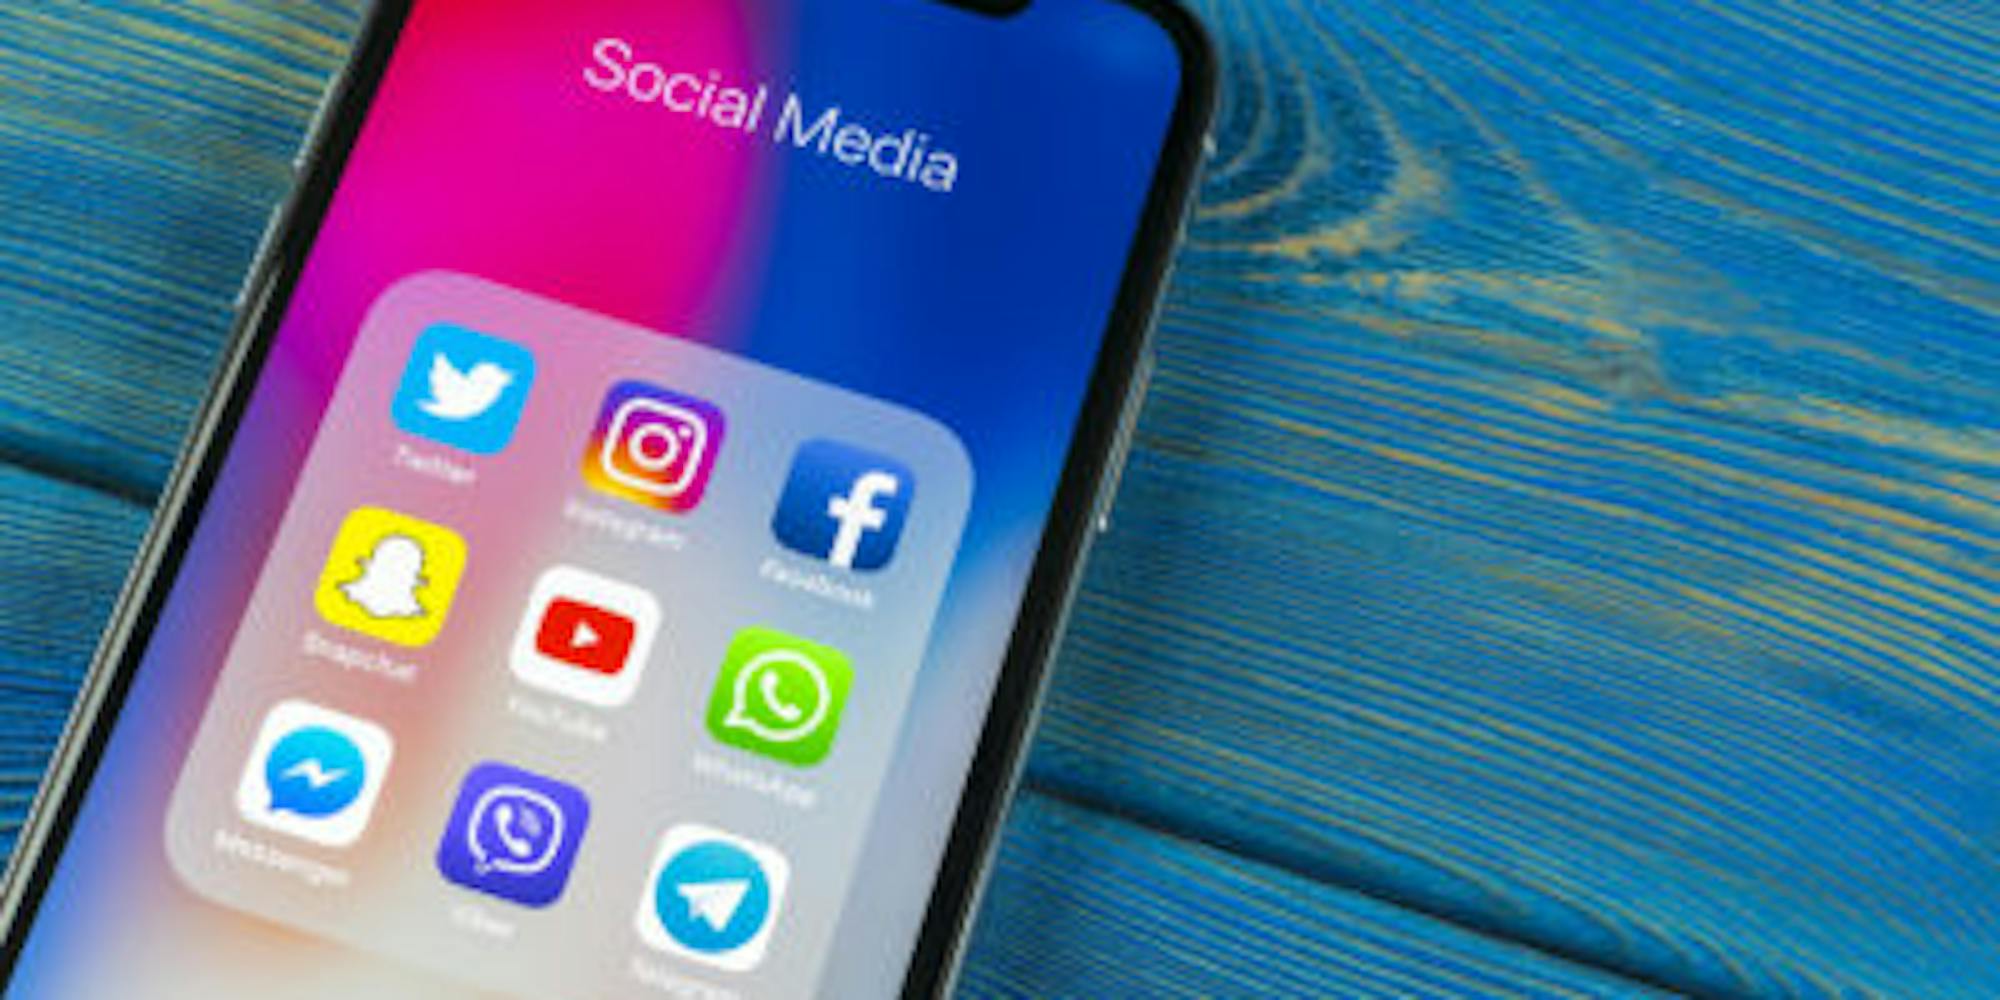 A phone showing social media platforms